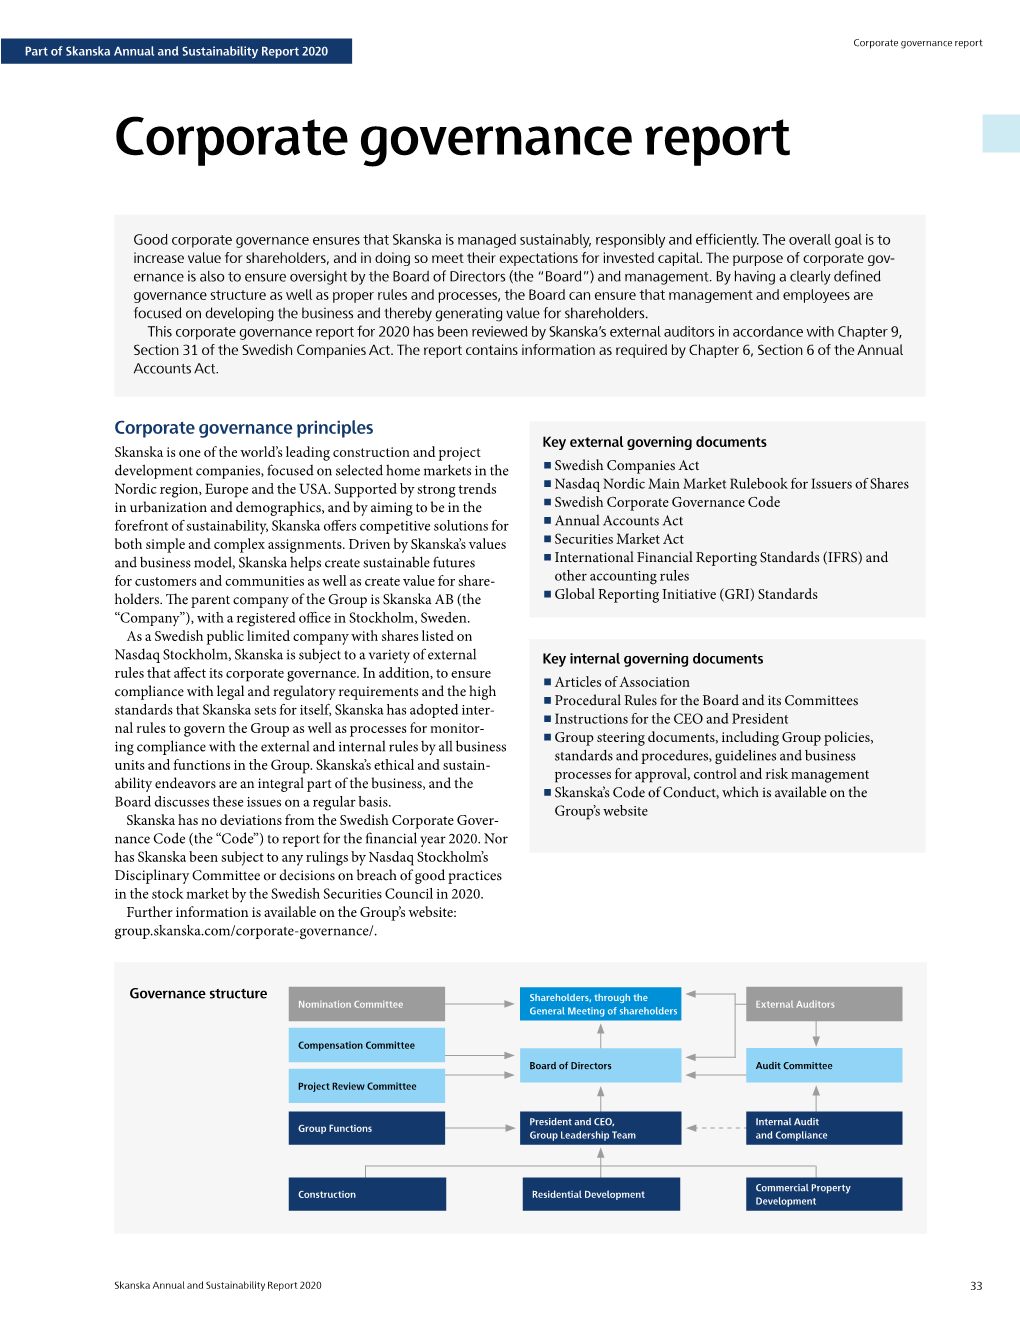 Skanska Corporate Governance Report 2020